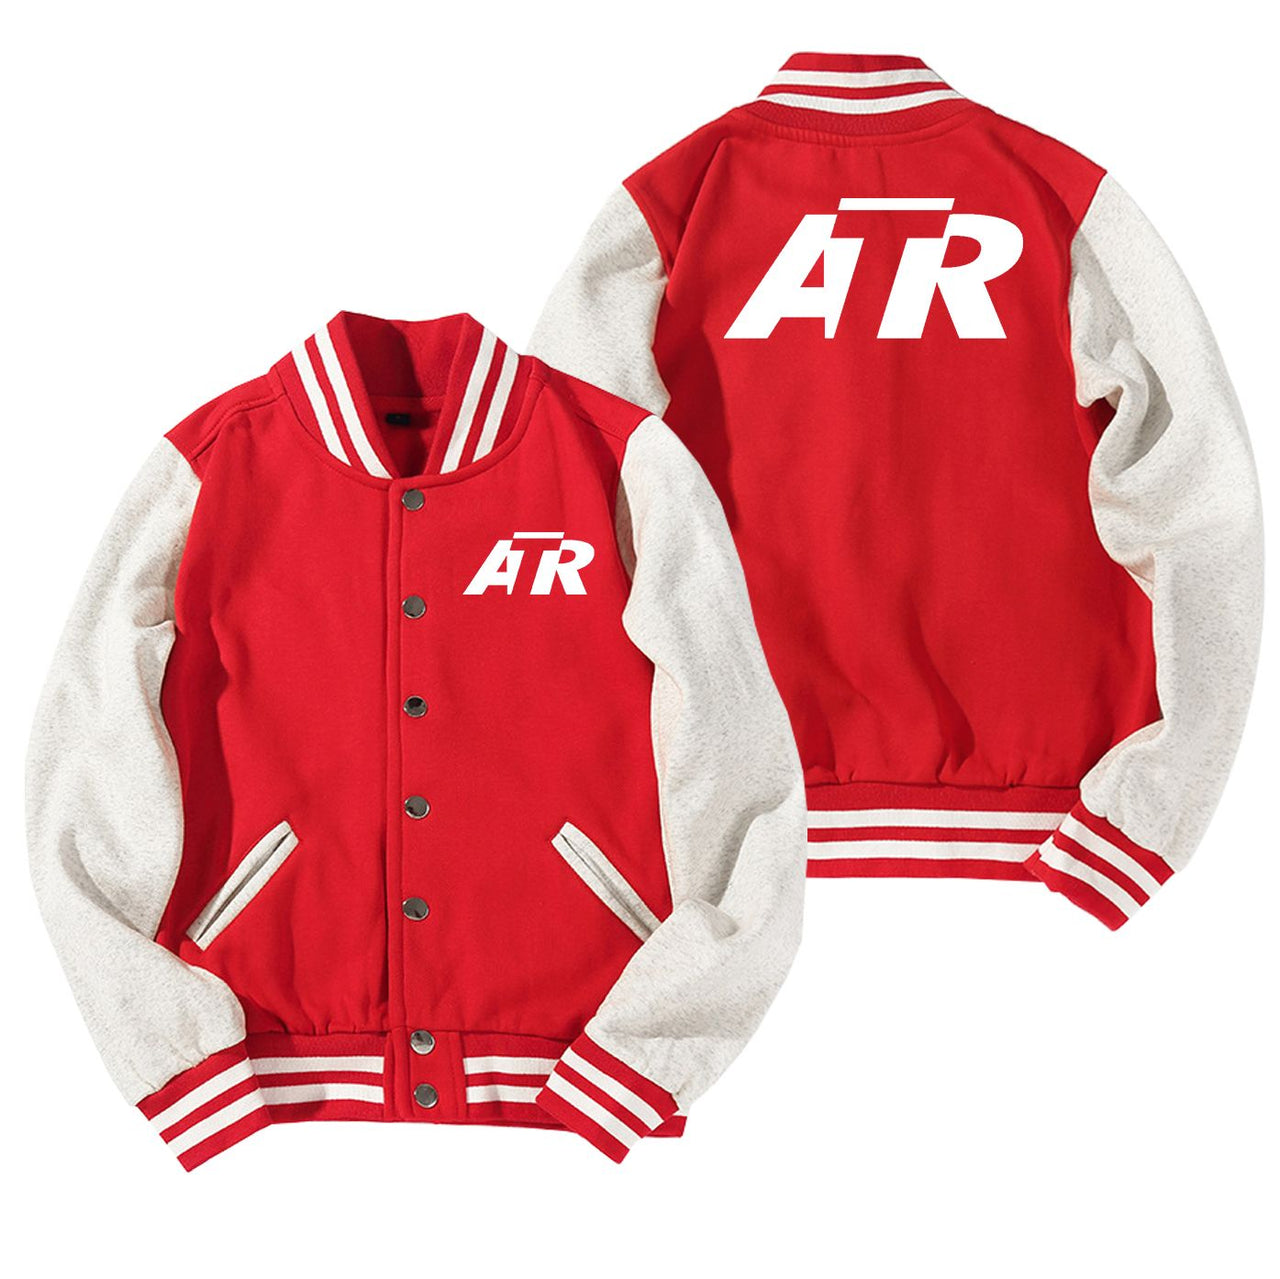 ATR & Text Designed Baseball Style Jackets